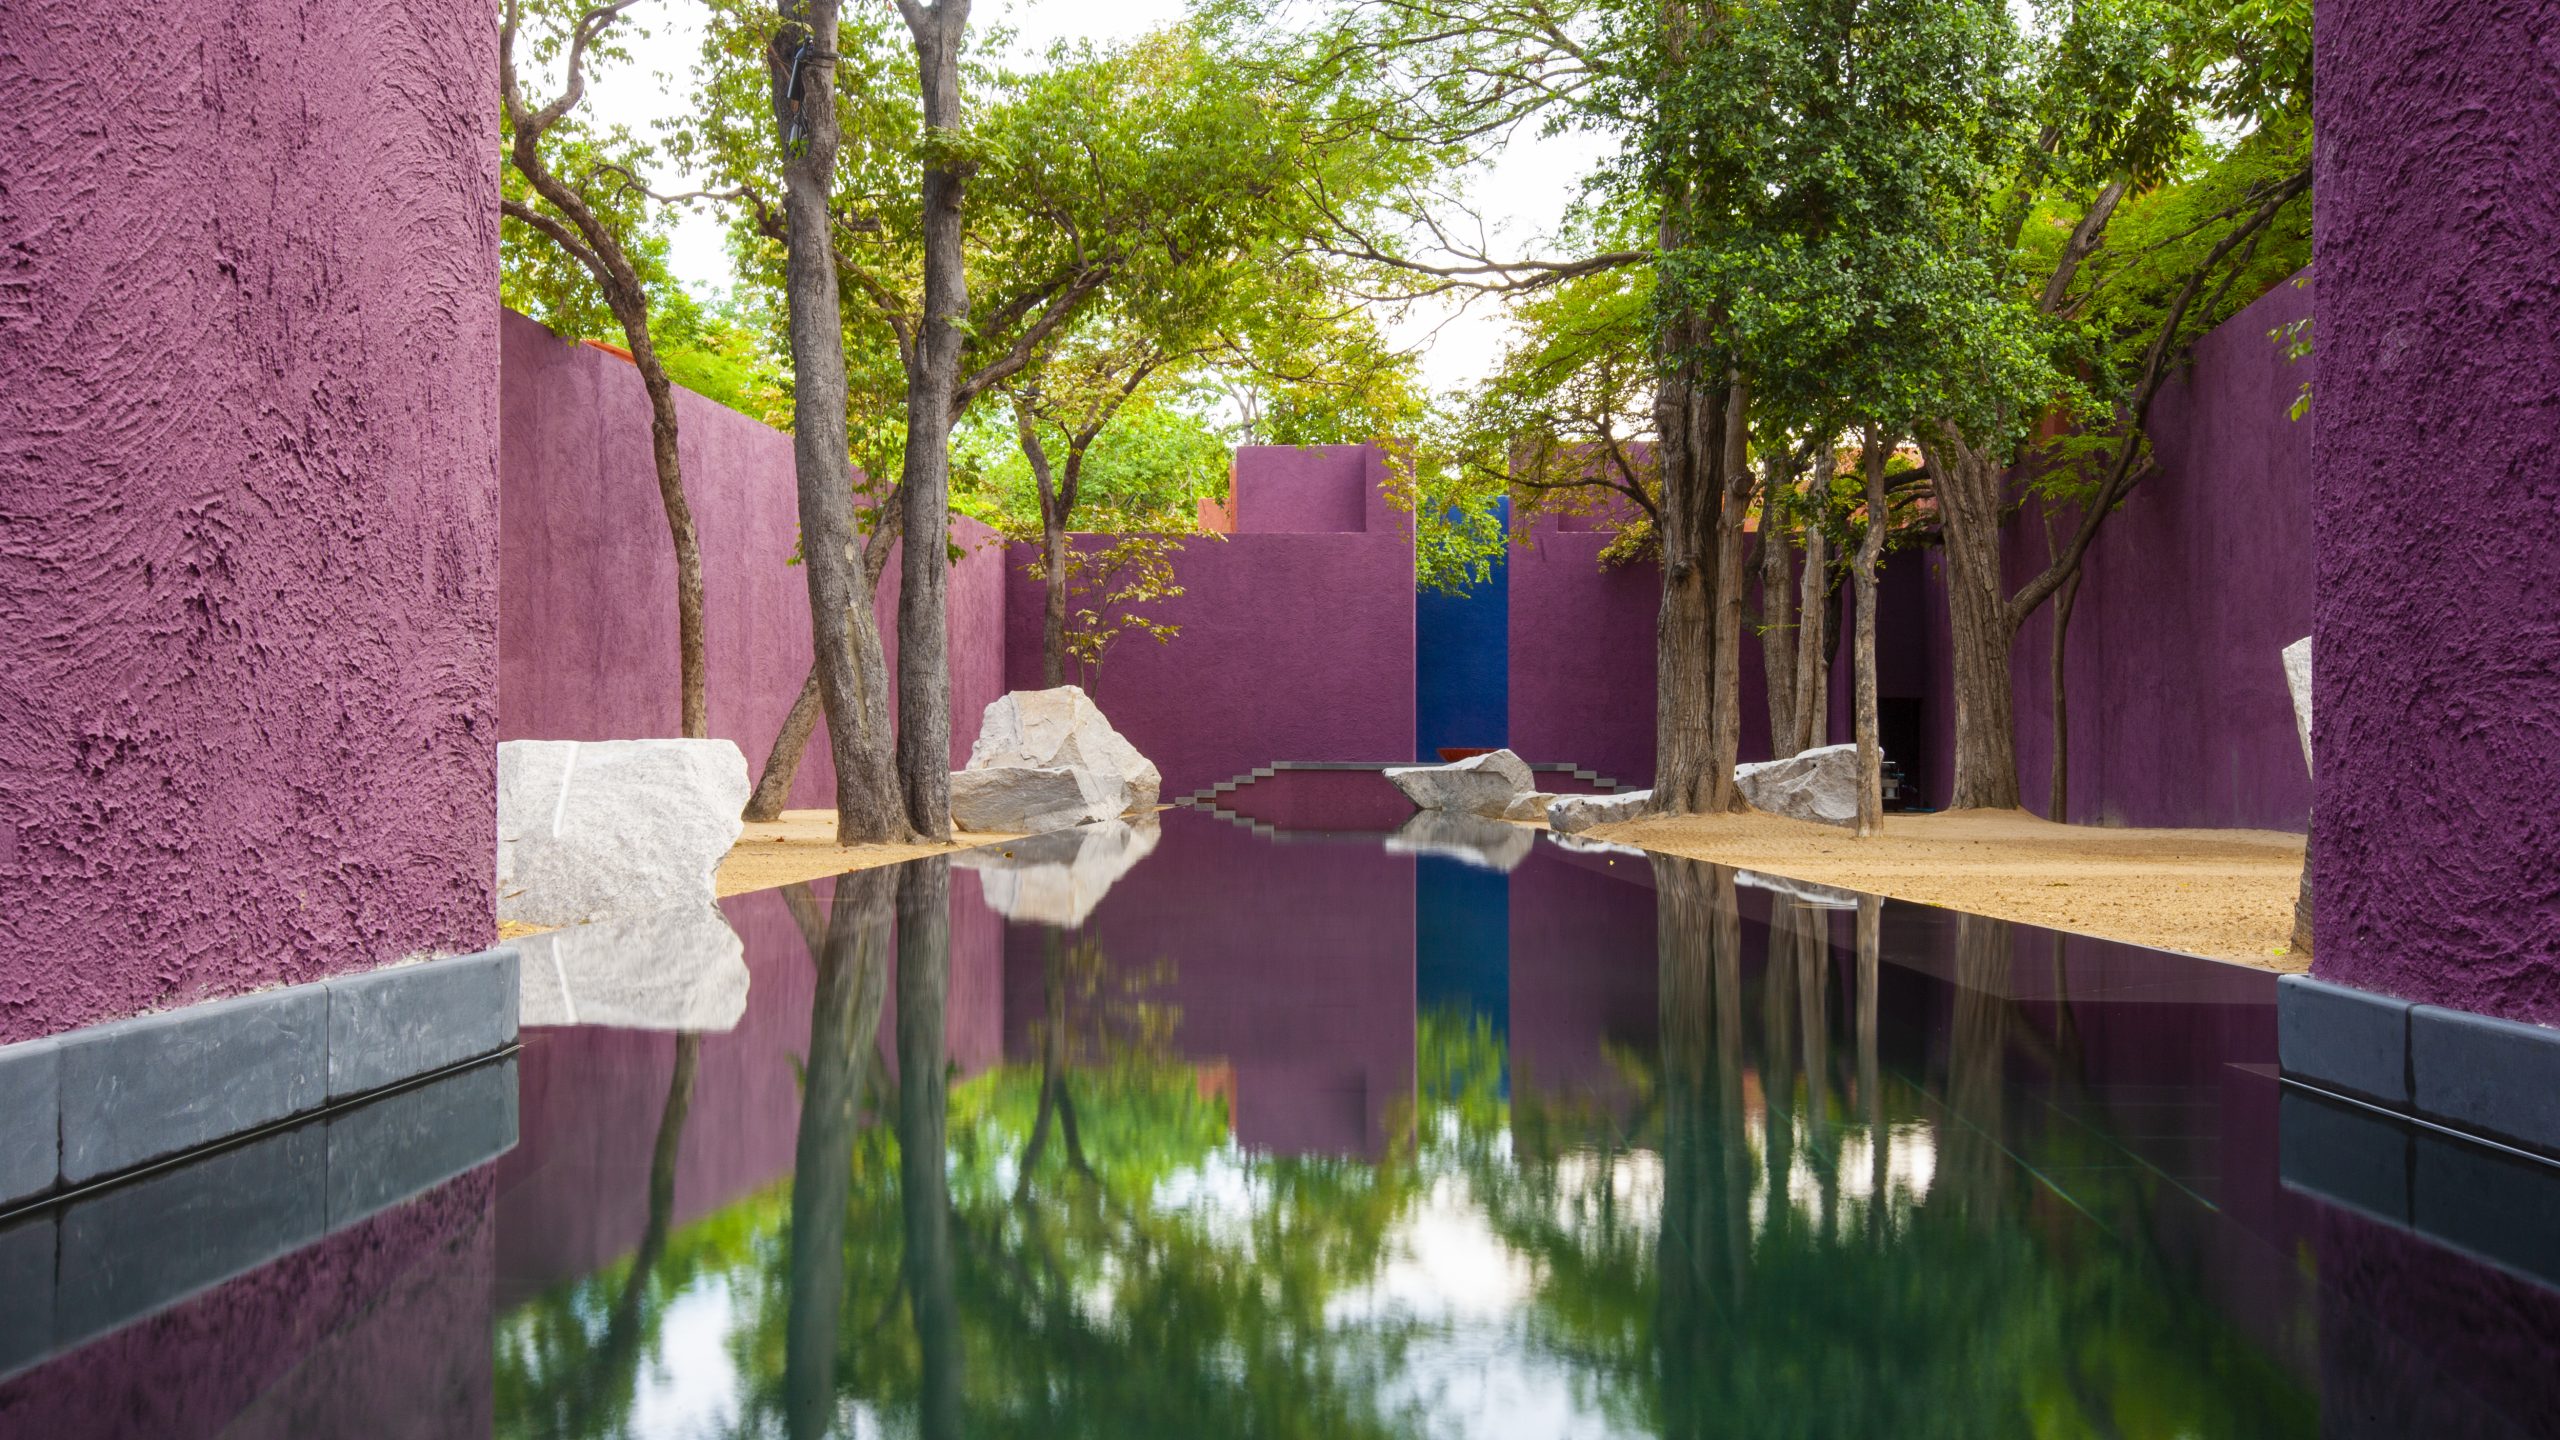 Architectural photography of a meditation and holiday retreat with a swimming pool and magenta color walls. Photographer Tuomas Harjumaaskola.